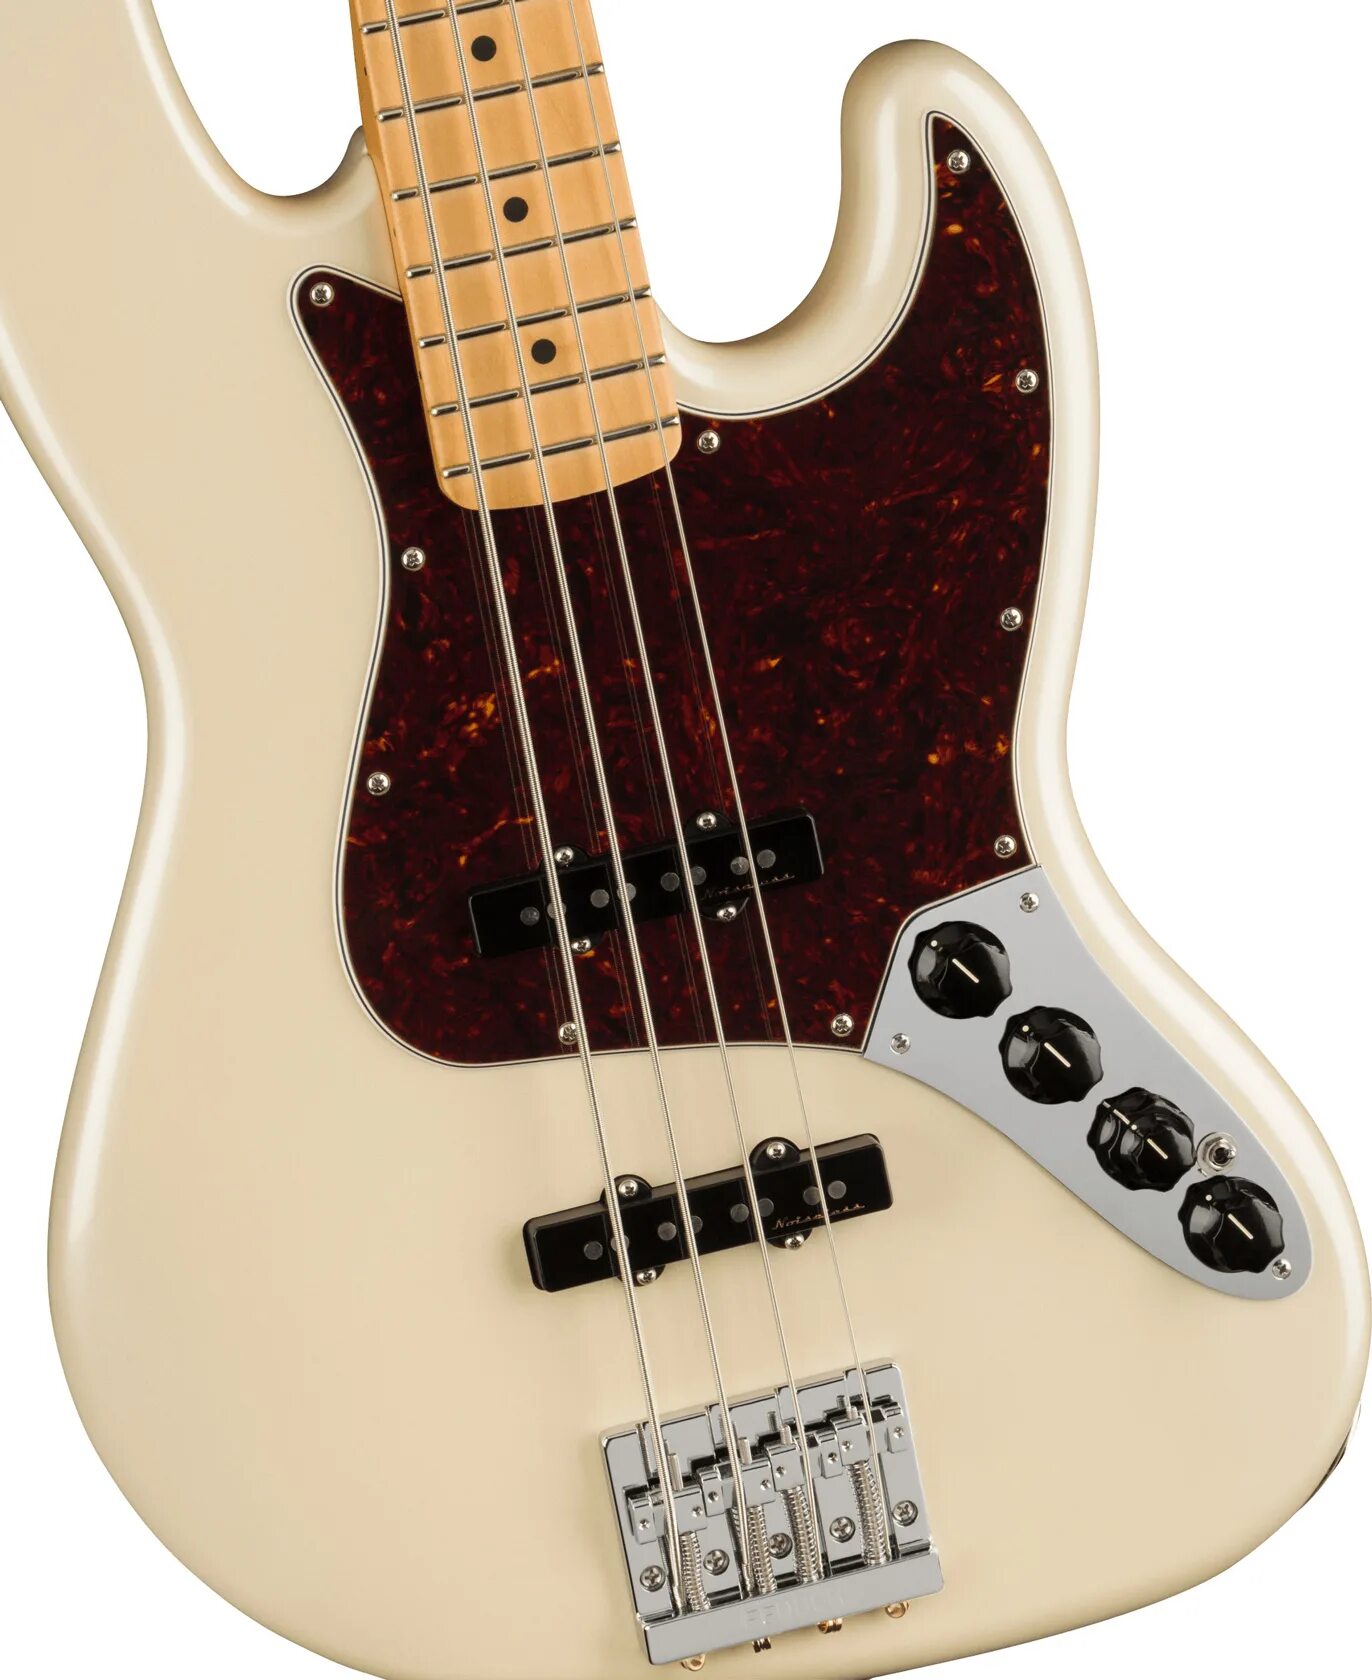 Джаза бас с кленовый накладкой Винтаж. Fender American professional II Precision Bass Fretboard. J Bass. Handy Pepper Jazz Bass.